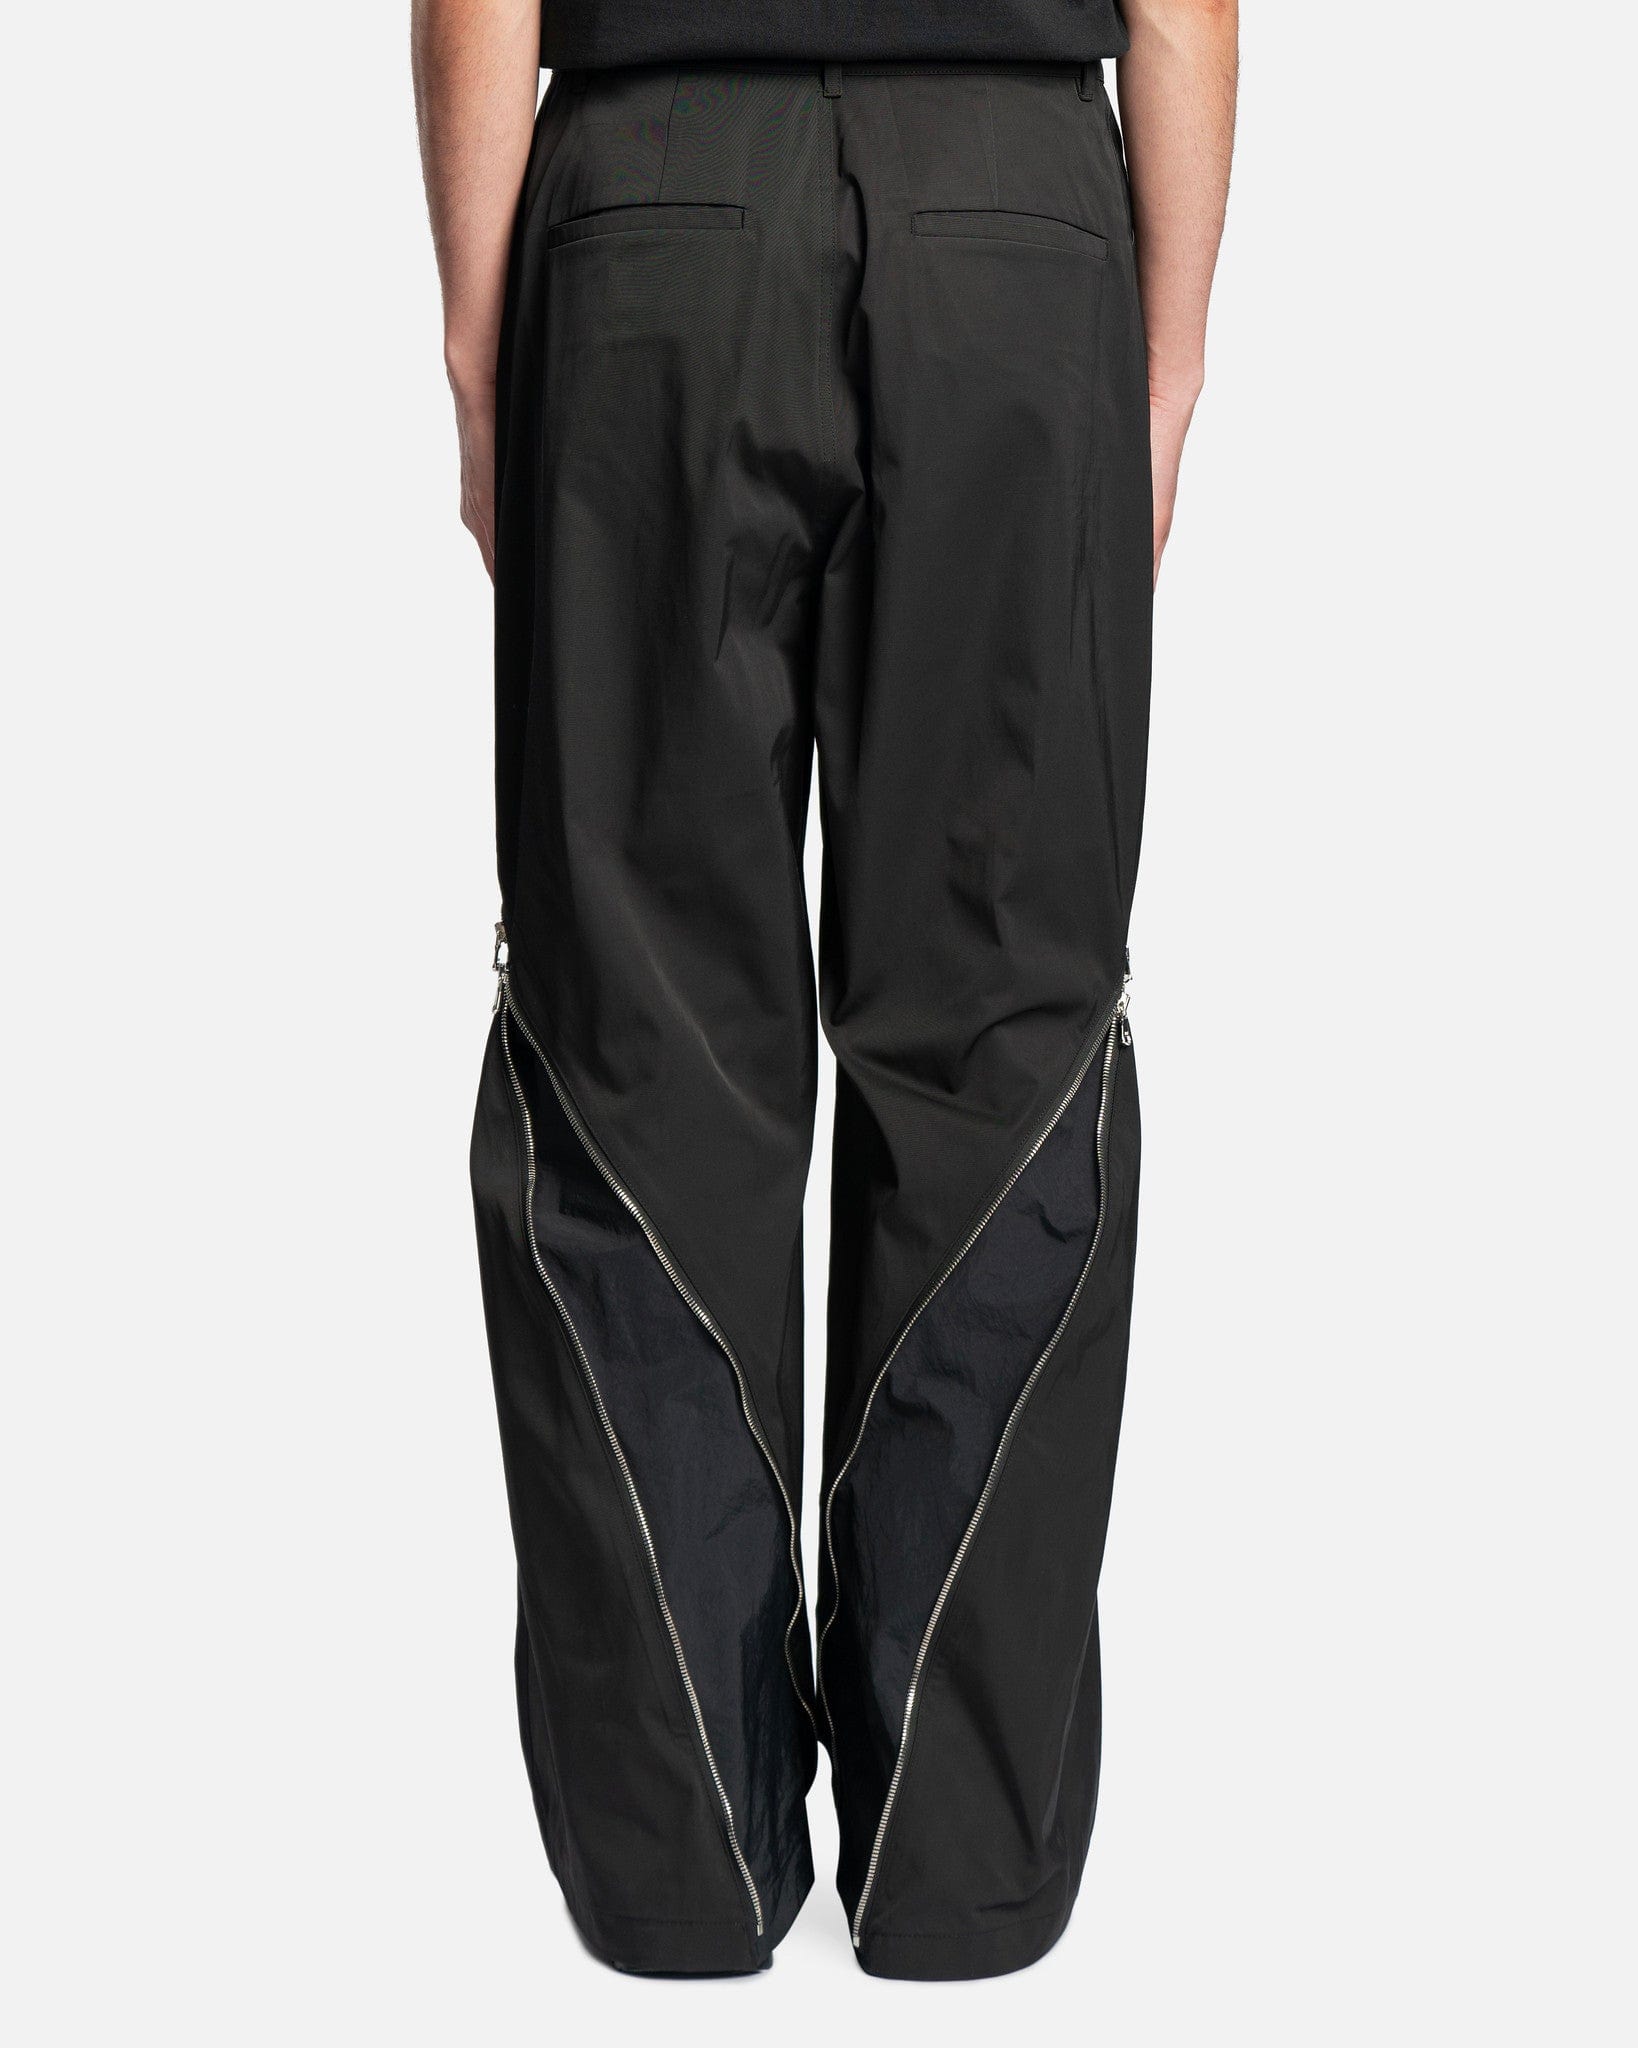 3-Way Zip Trouser in Black/Black